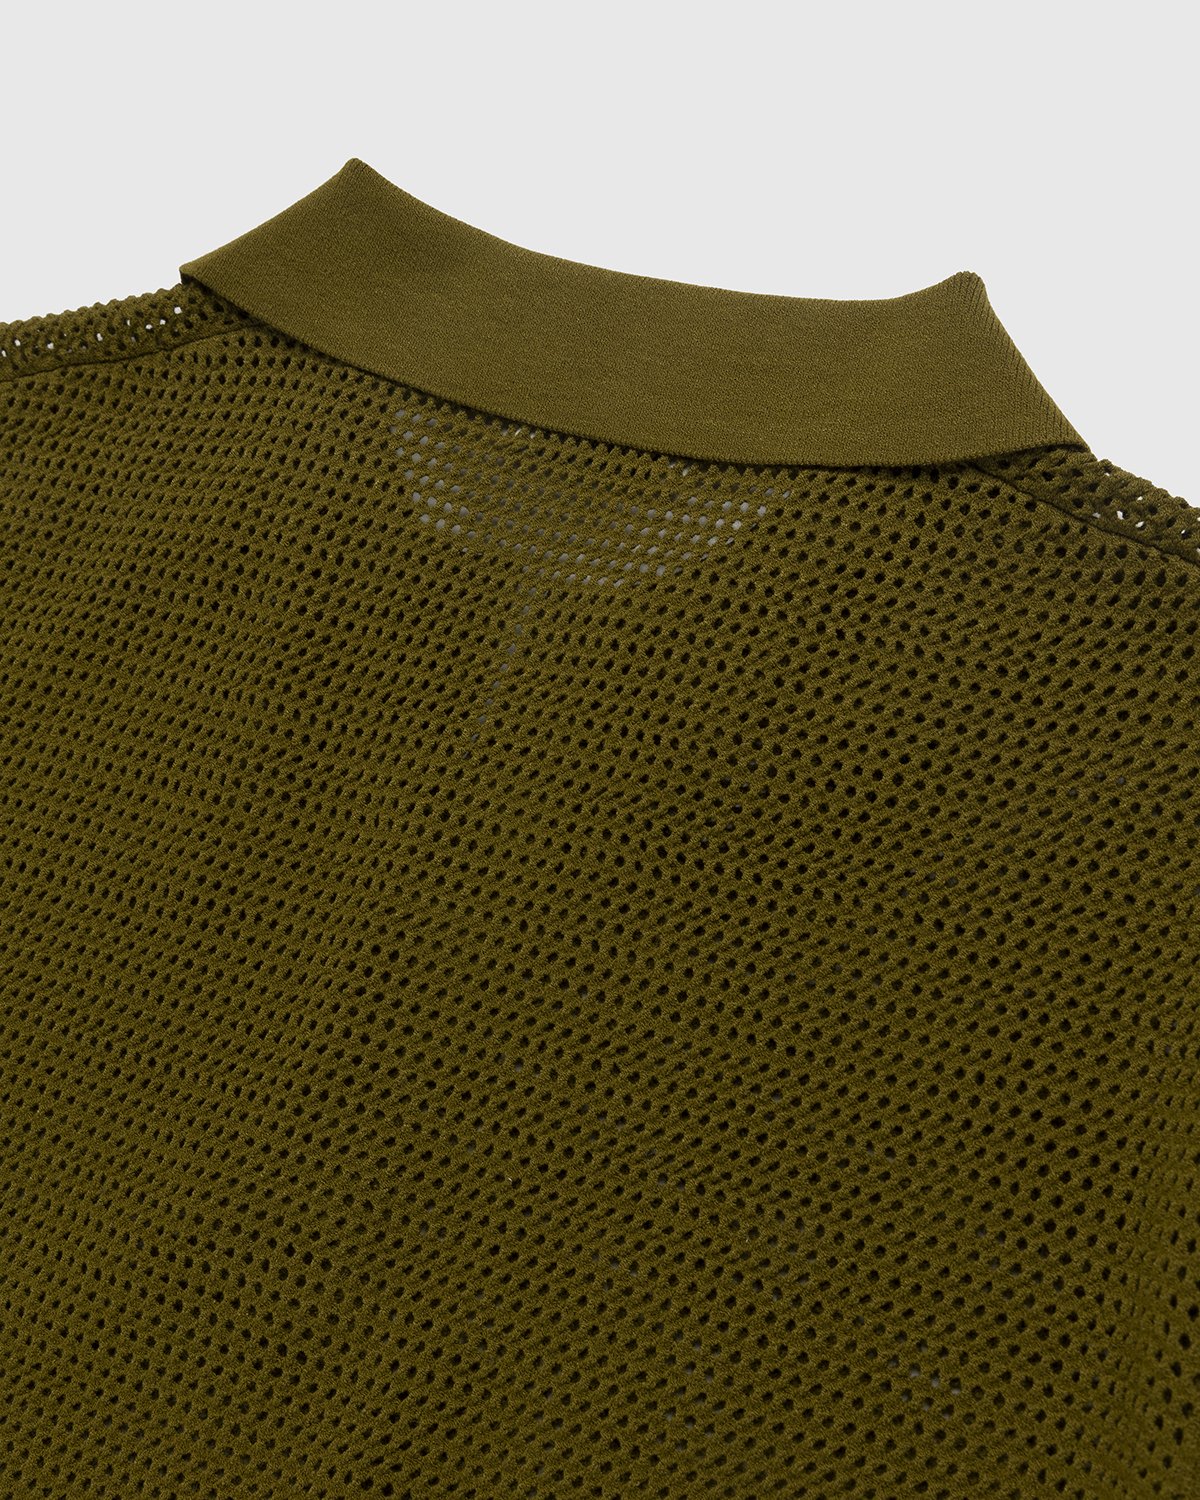 Dries van Noten - Jael Polo Shirt Olive - Clothing - Green - Image 3